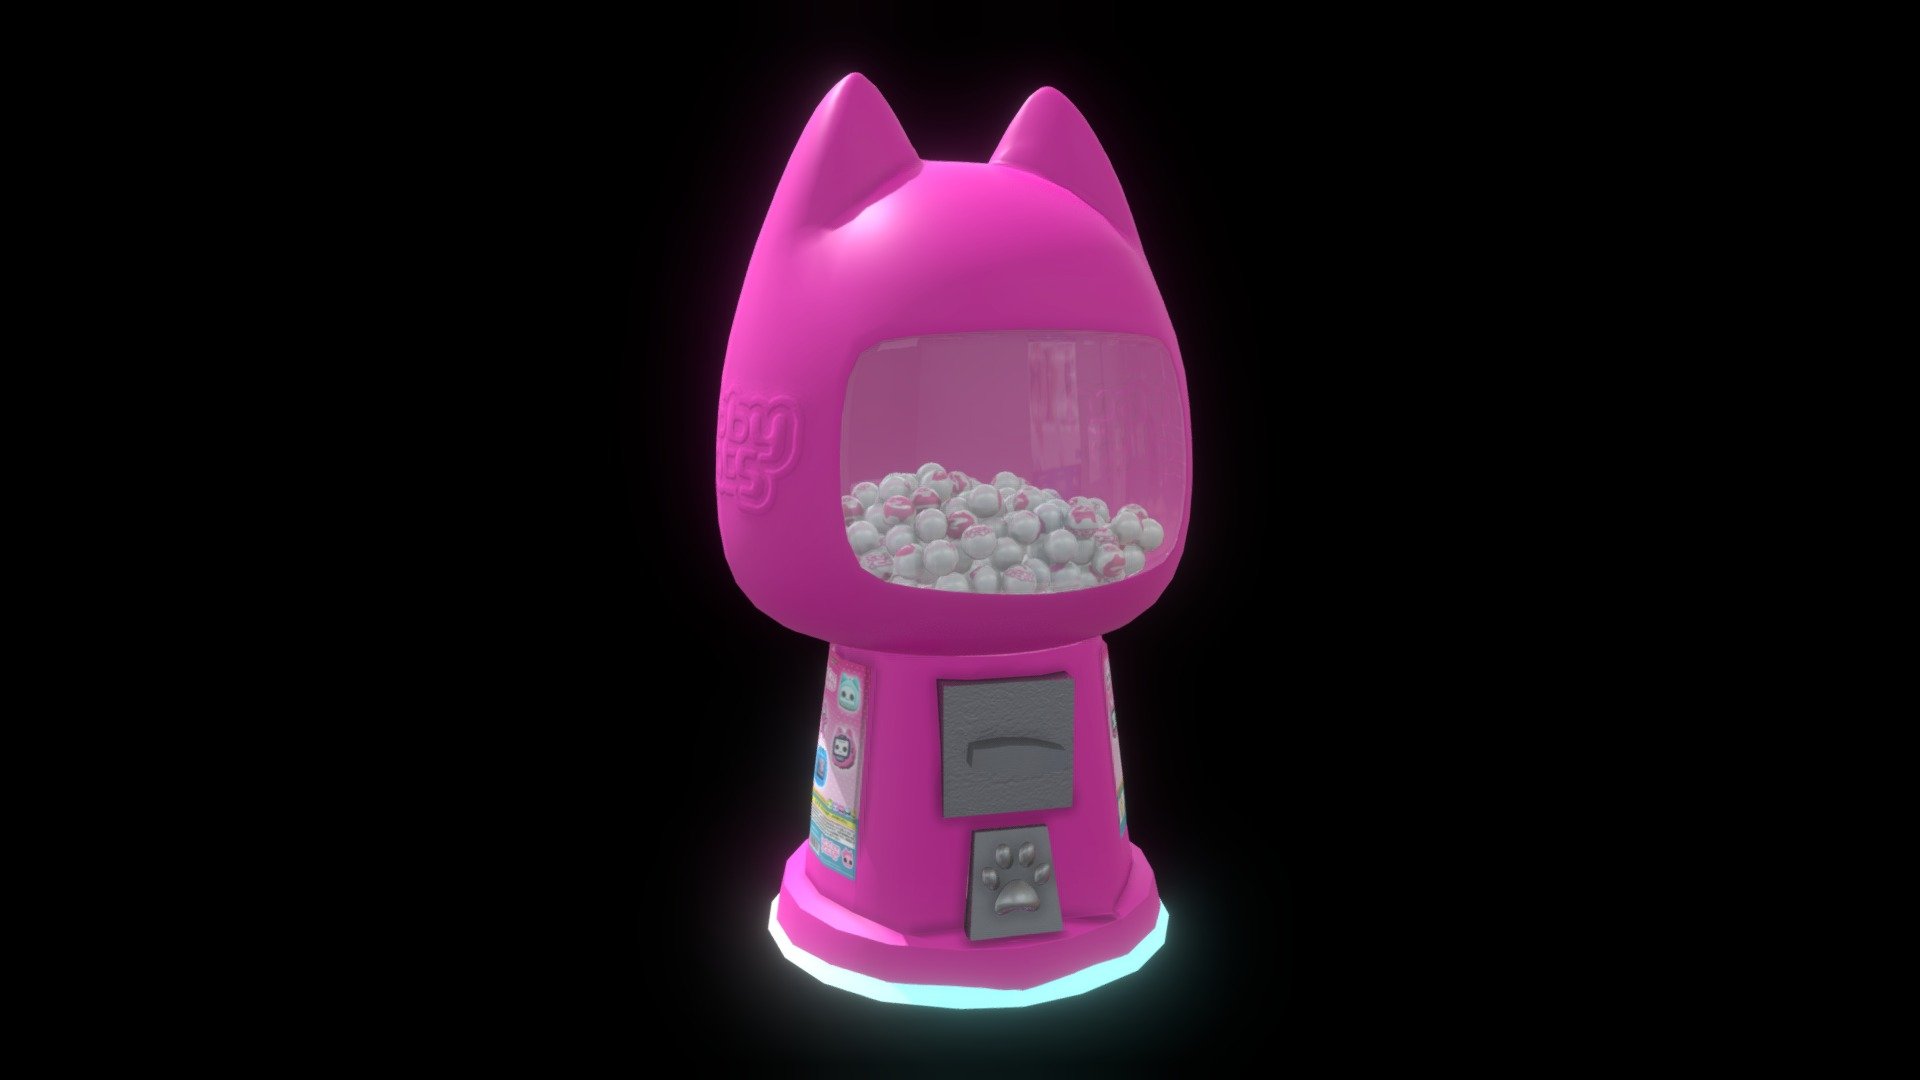 Tubbygotchi dispenser machine designed by 7OROY

version 1

https://tubbycats.xyz/links - TUBBYGATCHA - 3D model by m3org 3d model